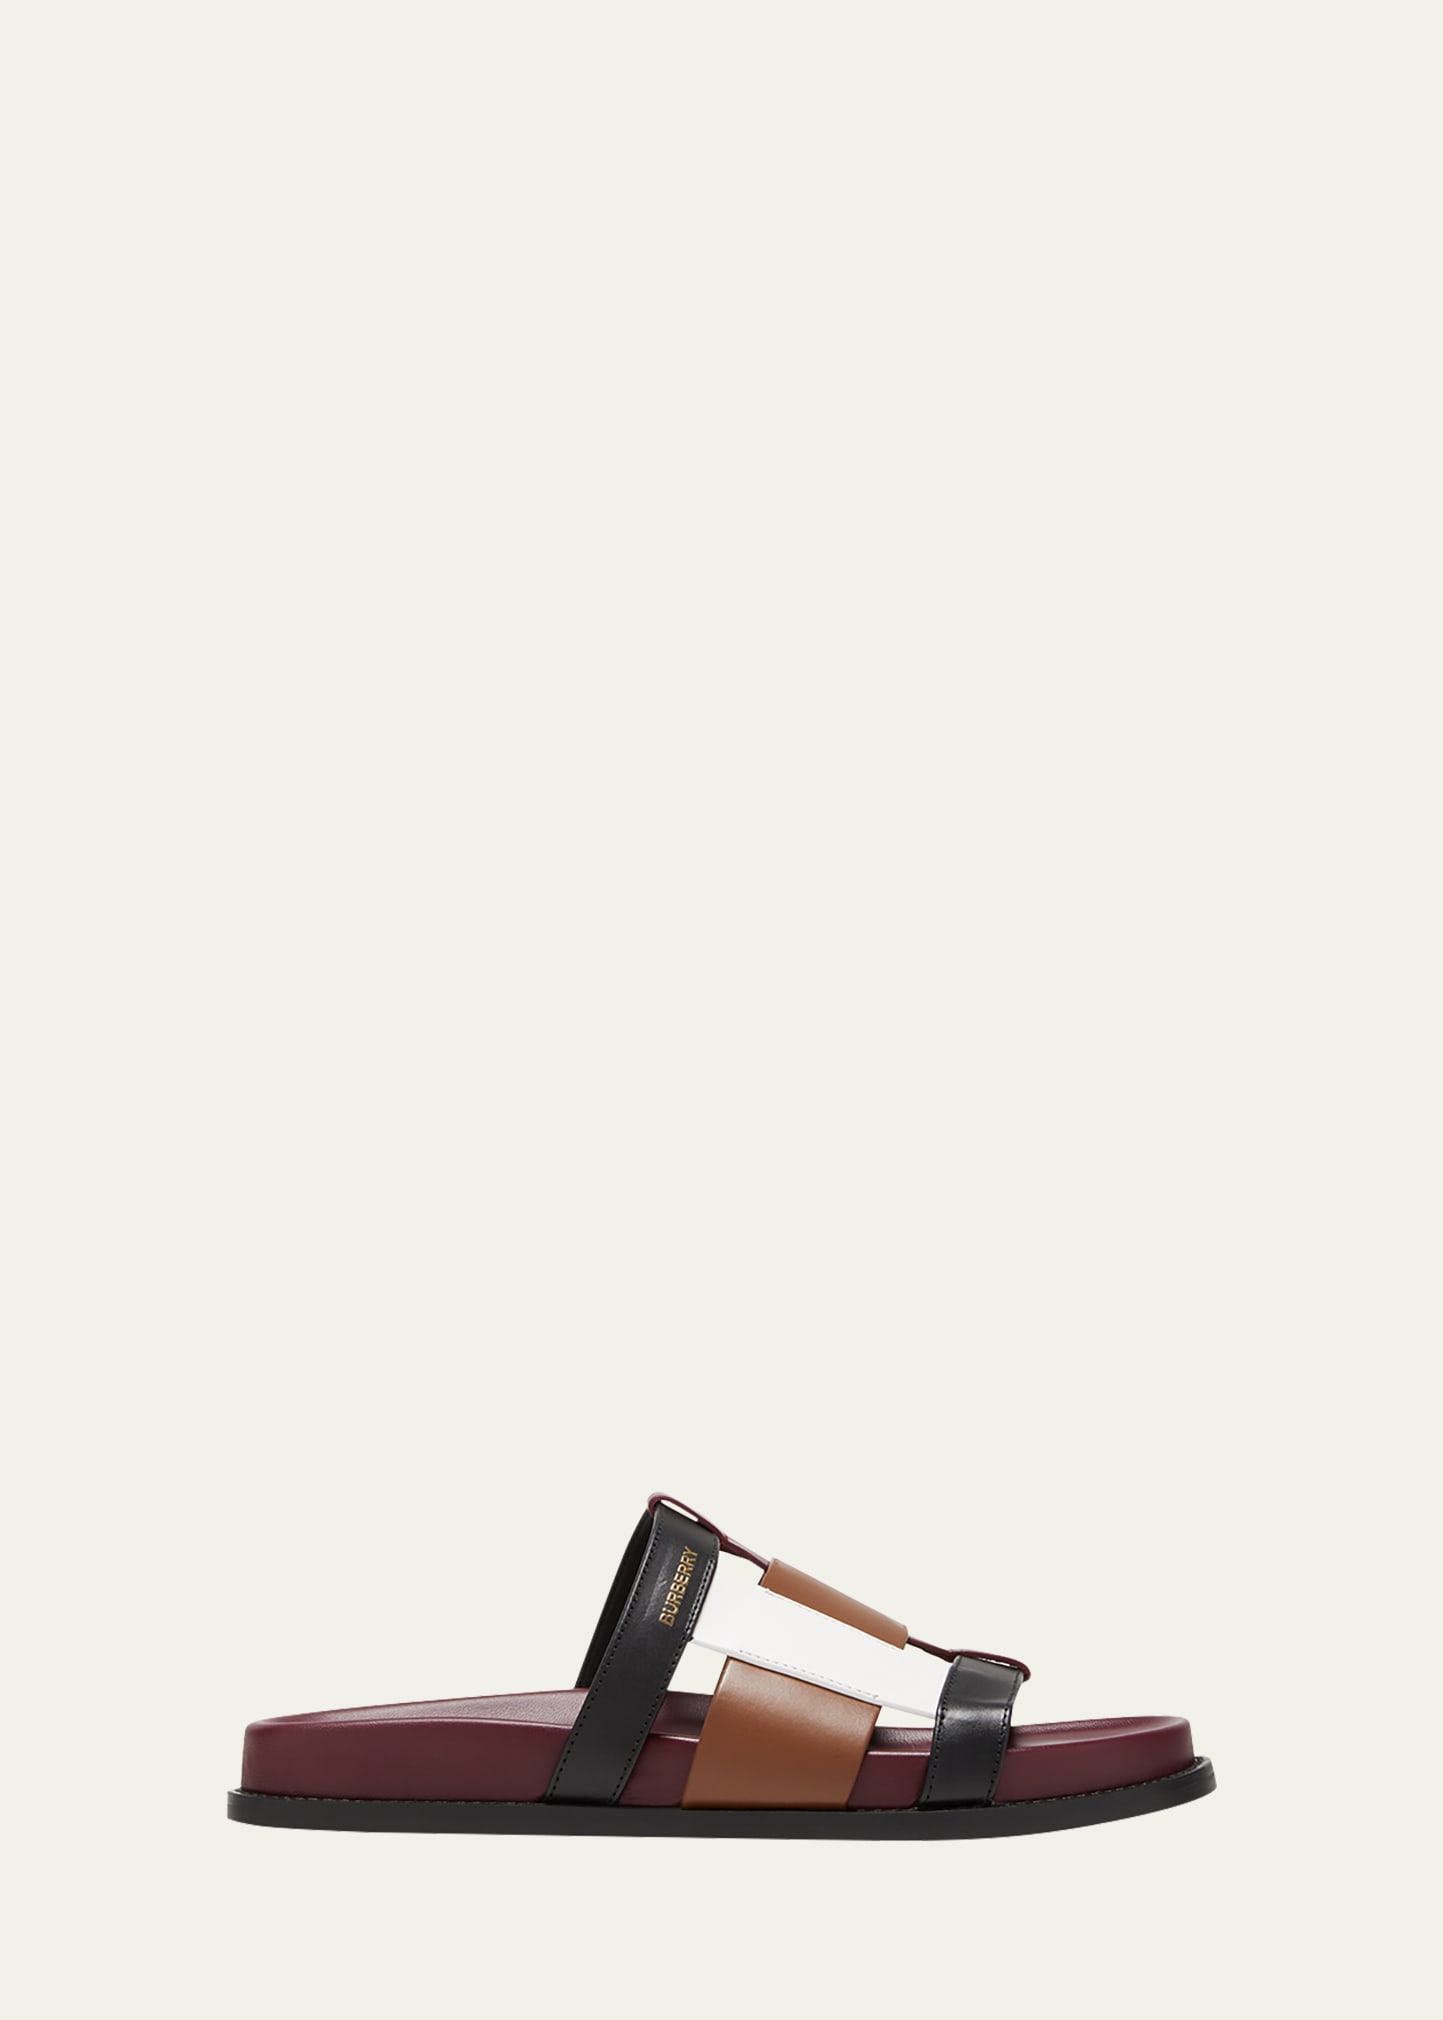 Burberry Colour Block Leather Slides In Dark Birch Brown/bordeaux/white